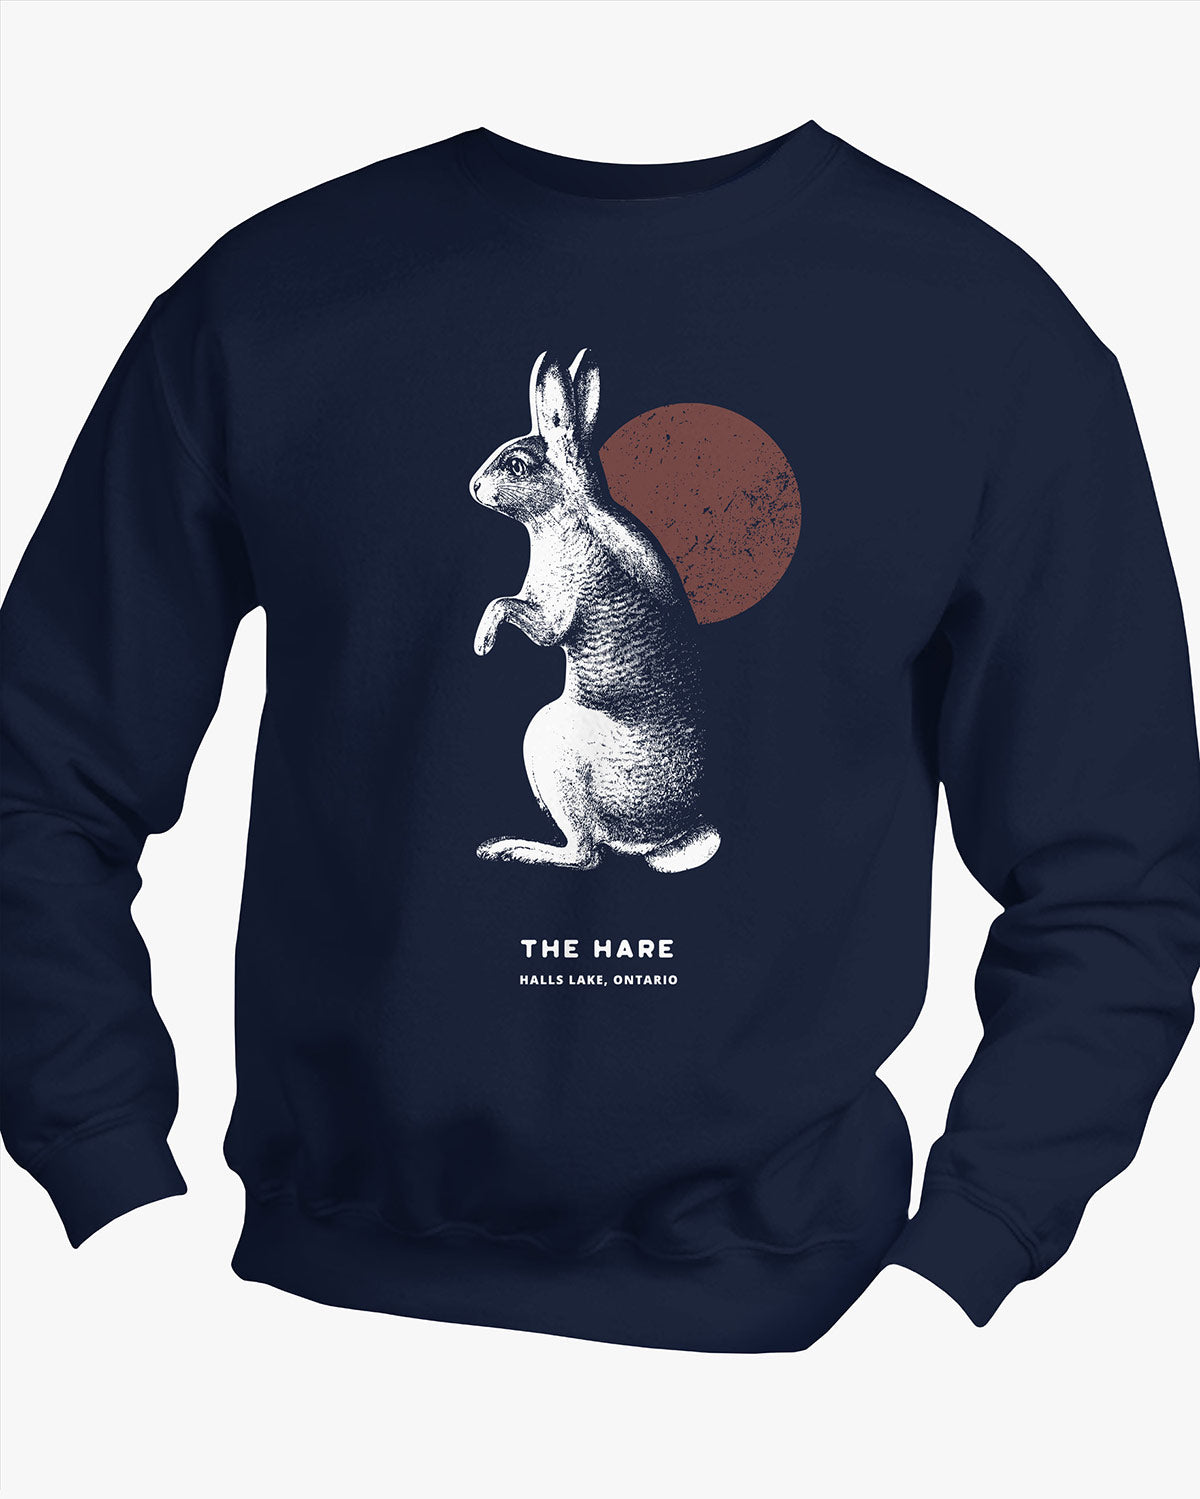 The Hare - Halls Lake - Sweater